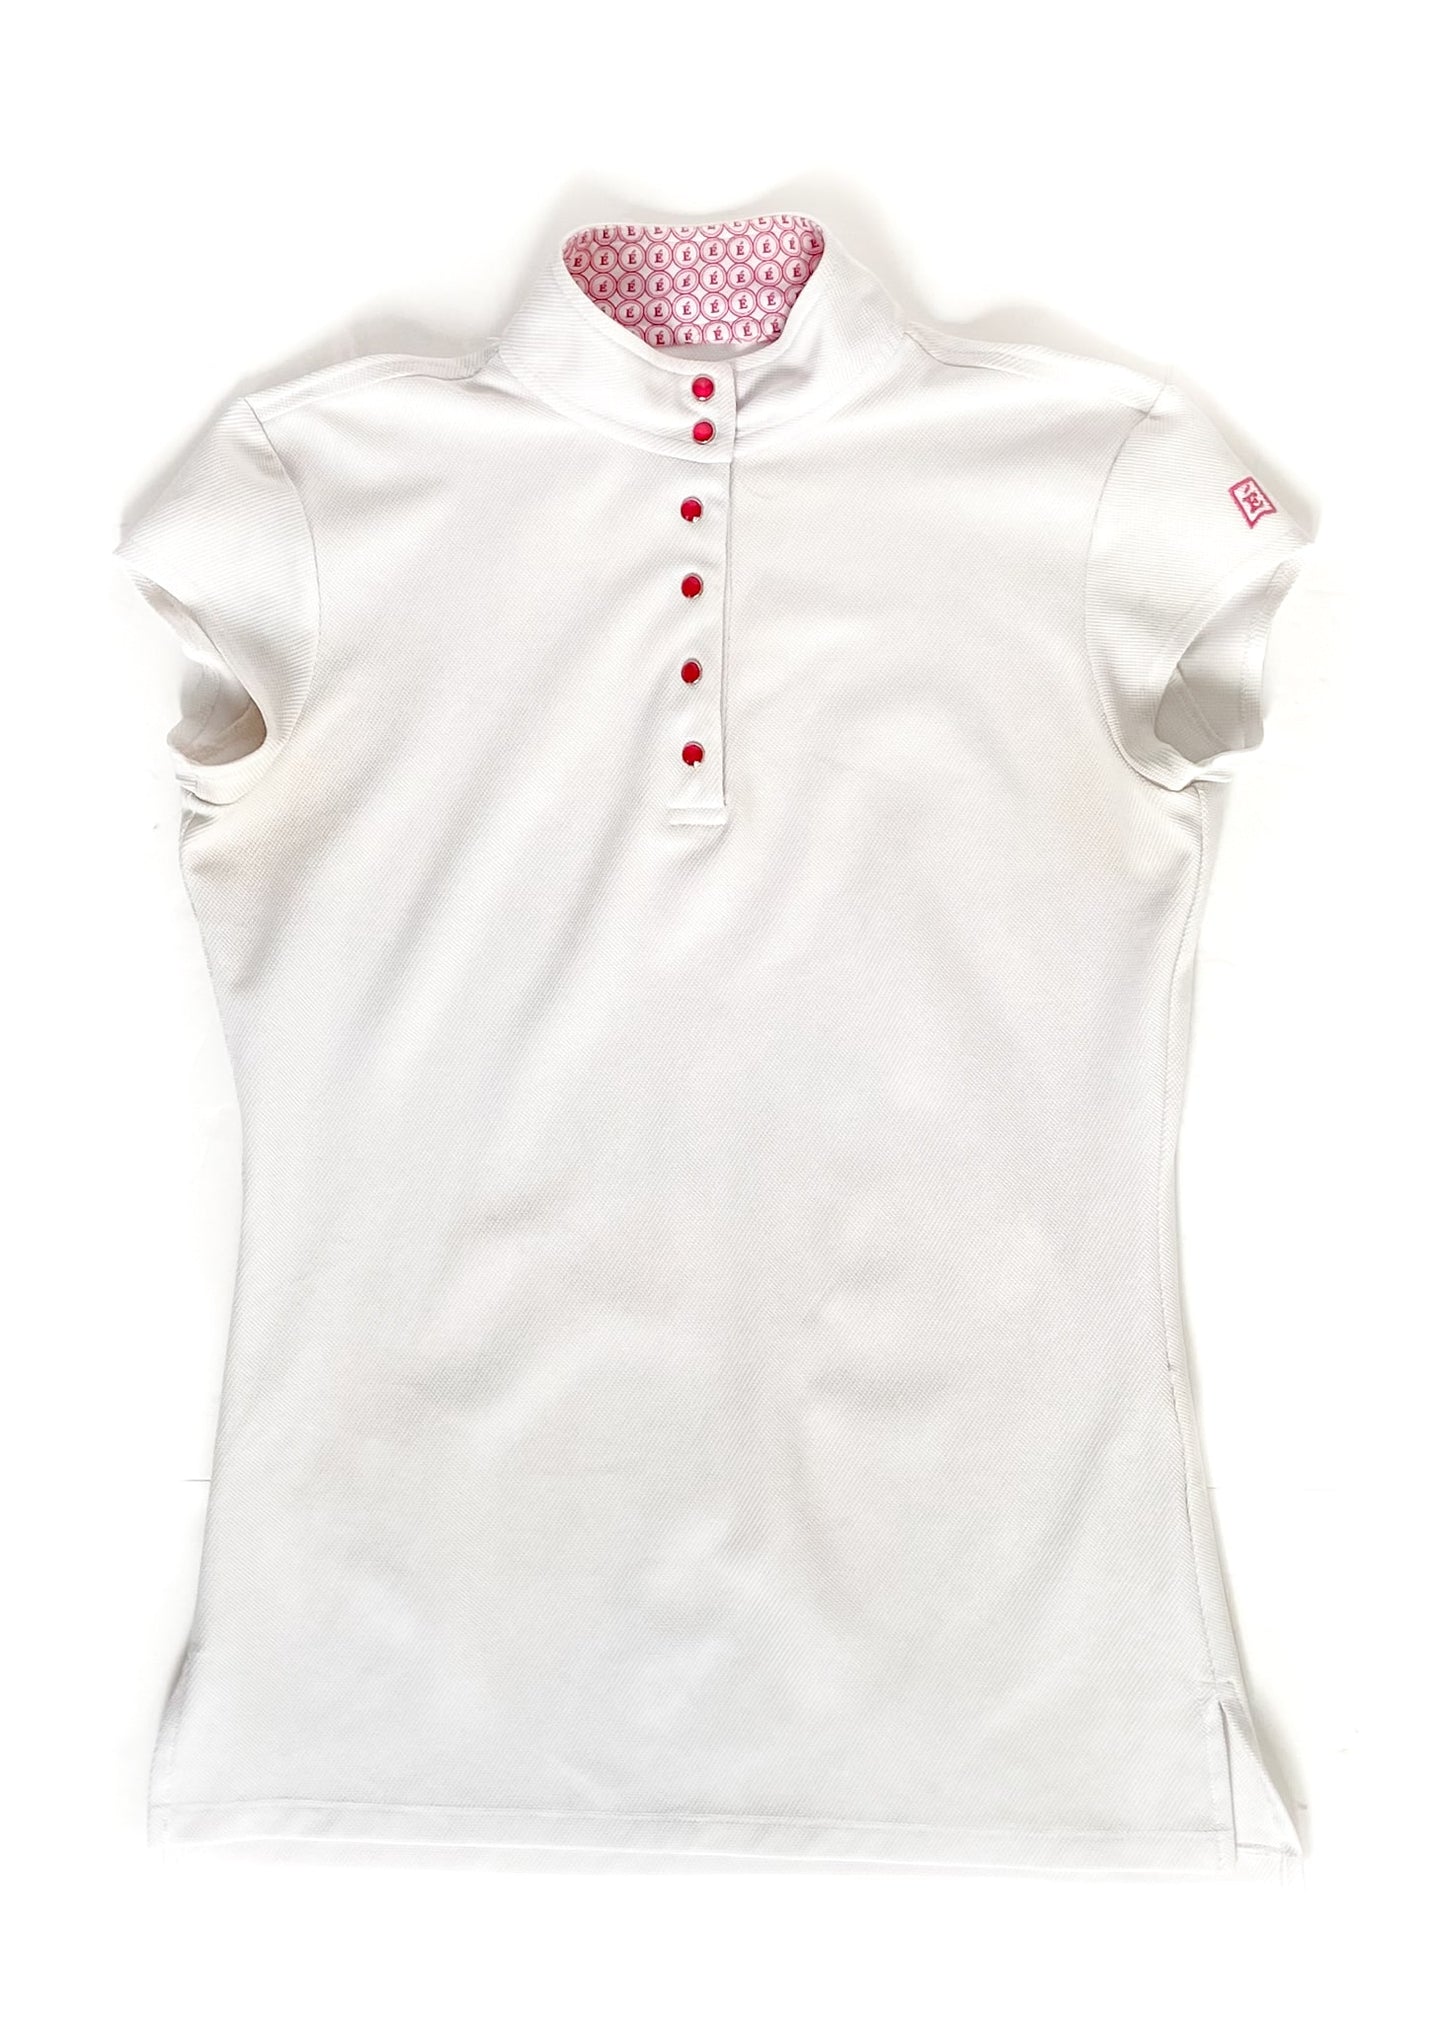 Ece Equestrian Co Sangria Cap Sleeve Competition Shirt - White - Women's Medium